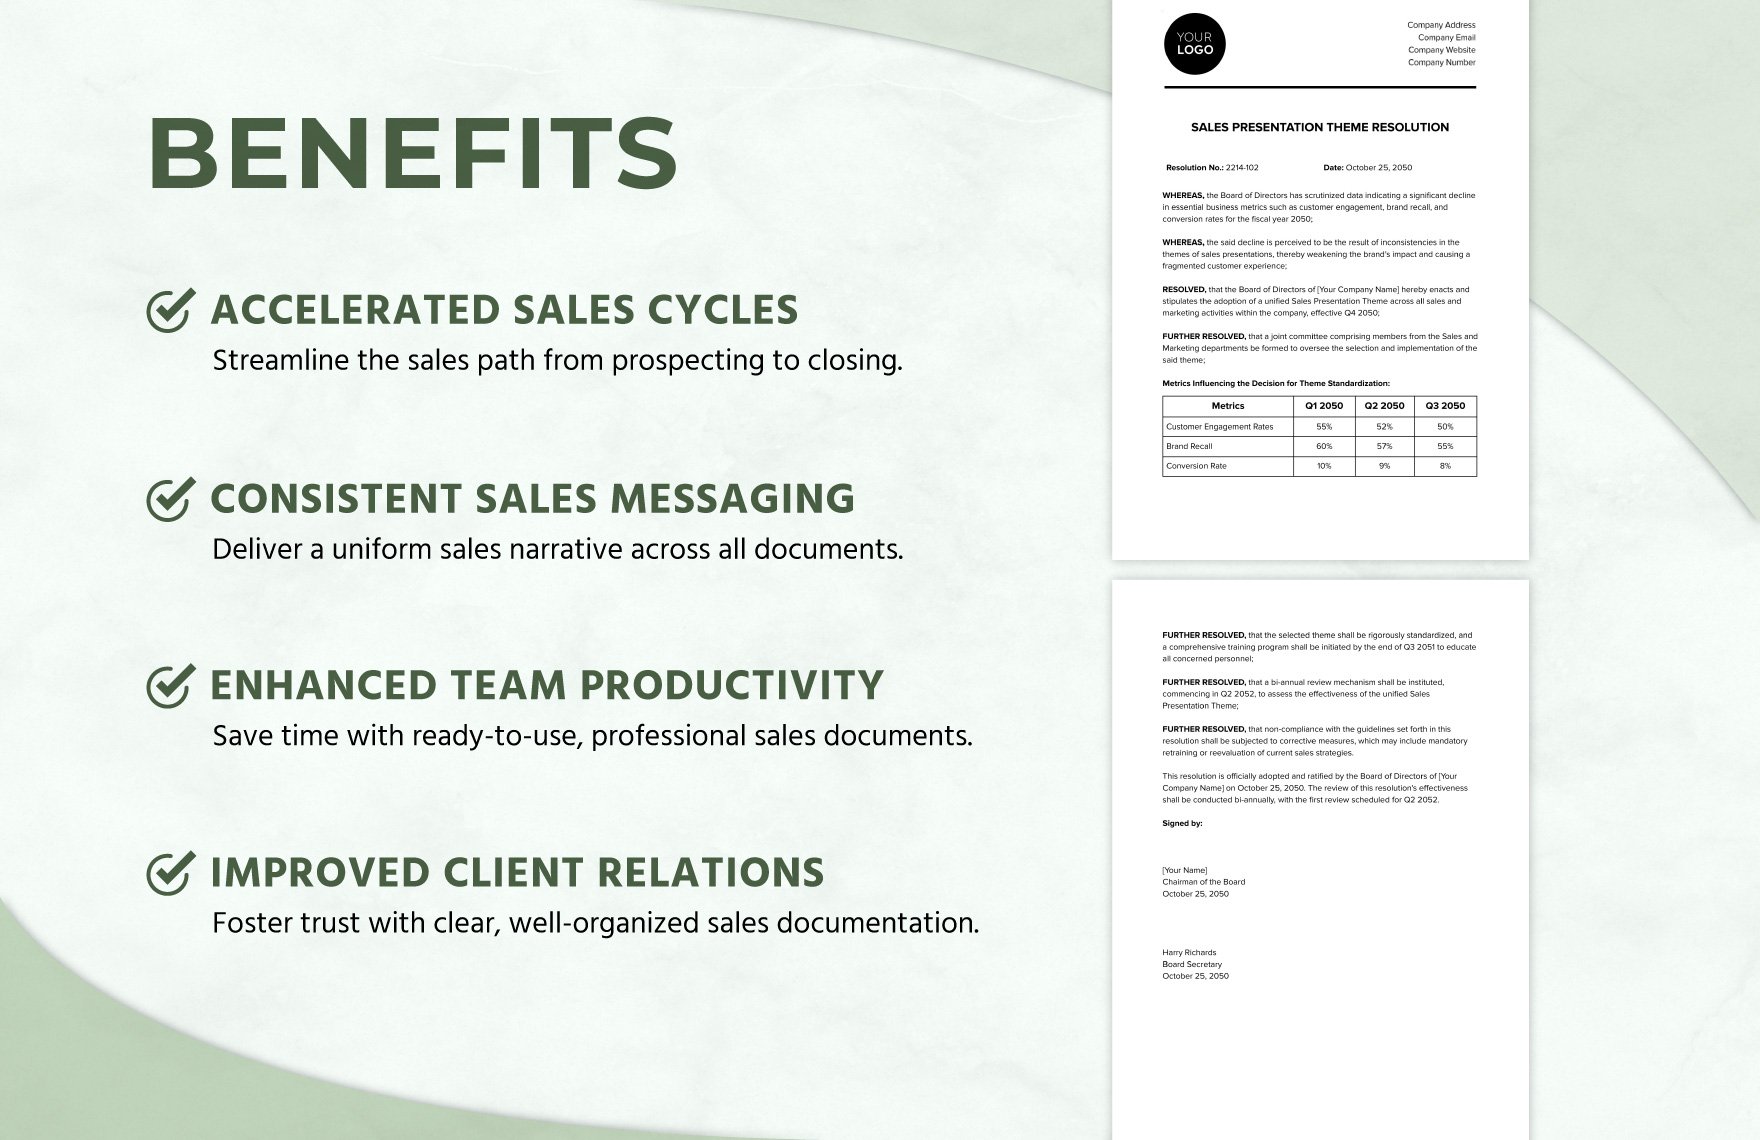 Sales Presentation Theme Resolution Template